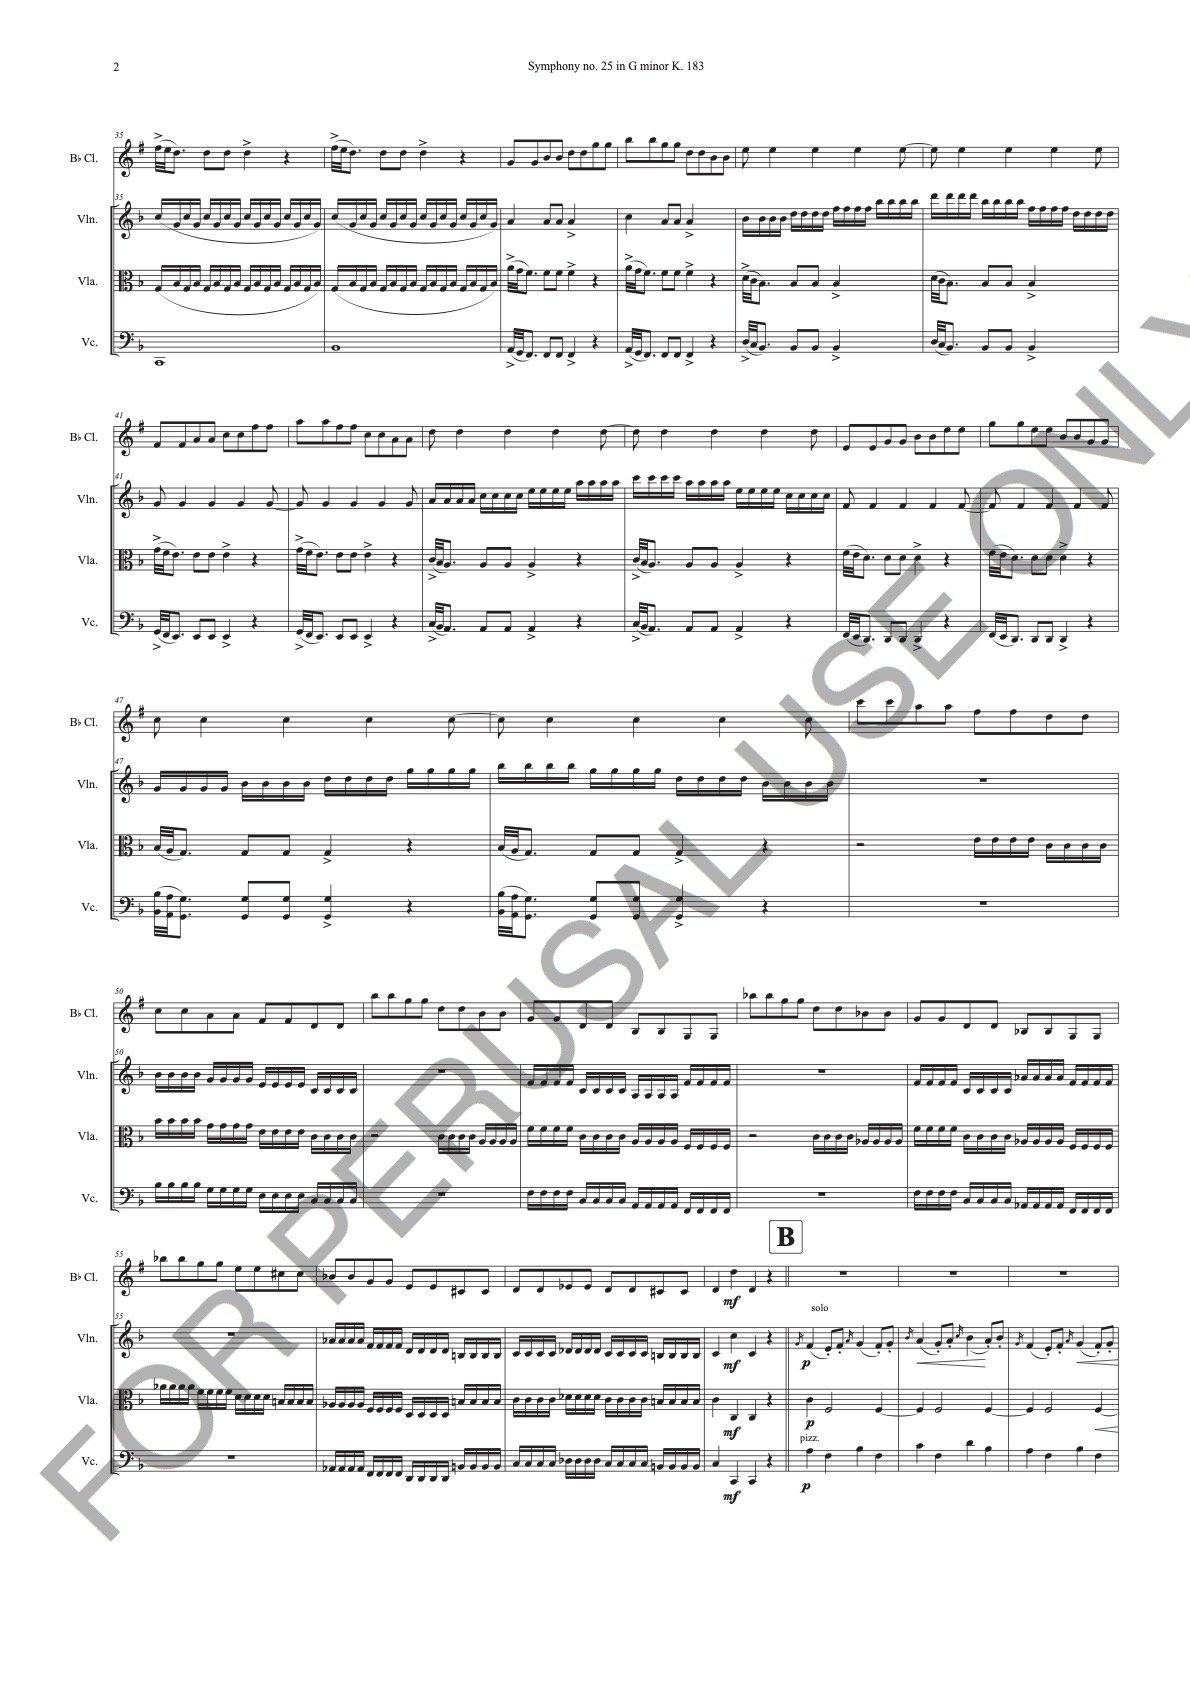 Clarinet Quartet sheet music: Mozart's Symphony no. 25 - ChaipruckMekara